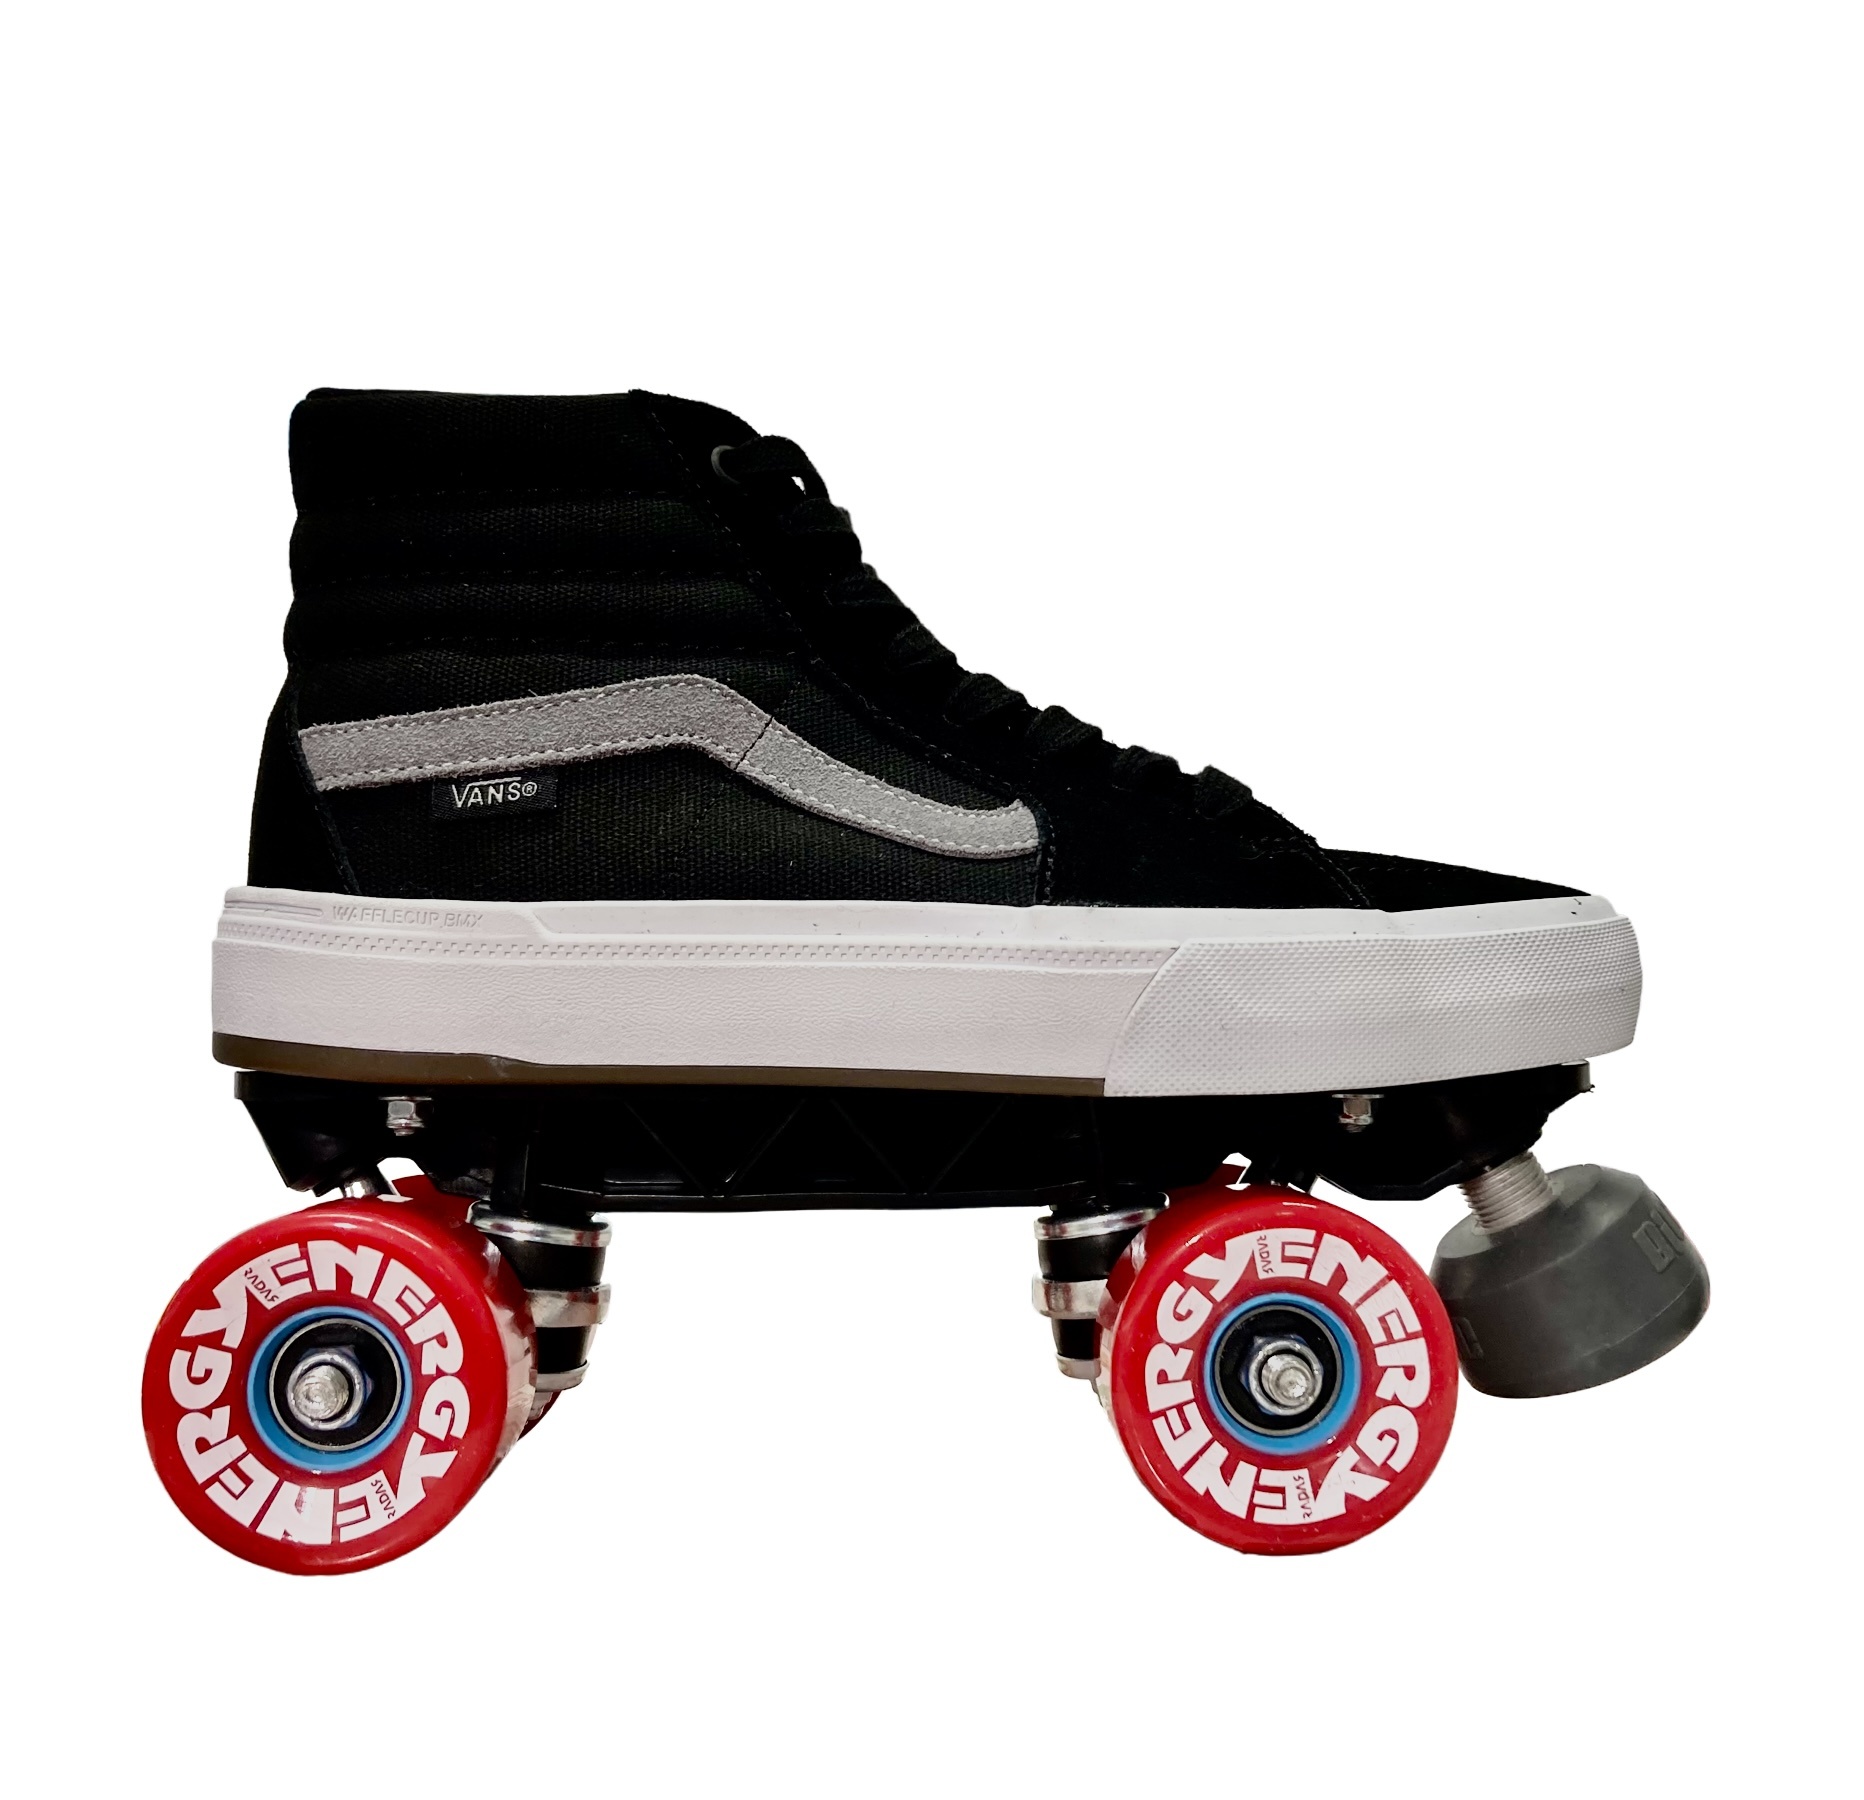 Vans custom Roller Skates - Sk8 - Hi Pro Vans x Skateistan - made